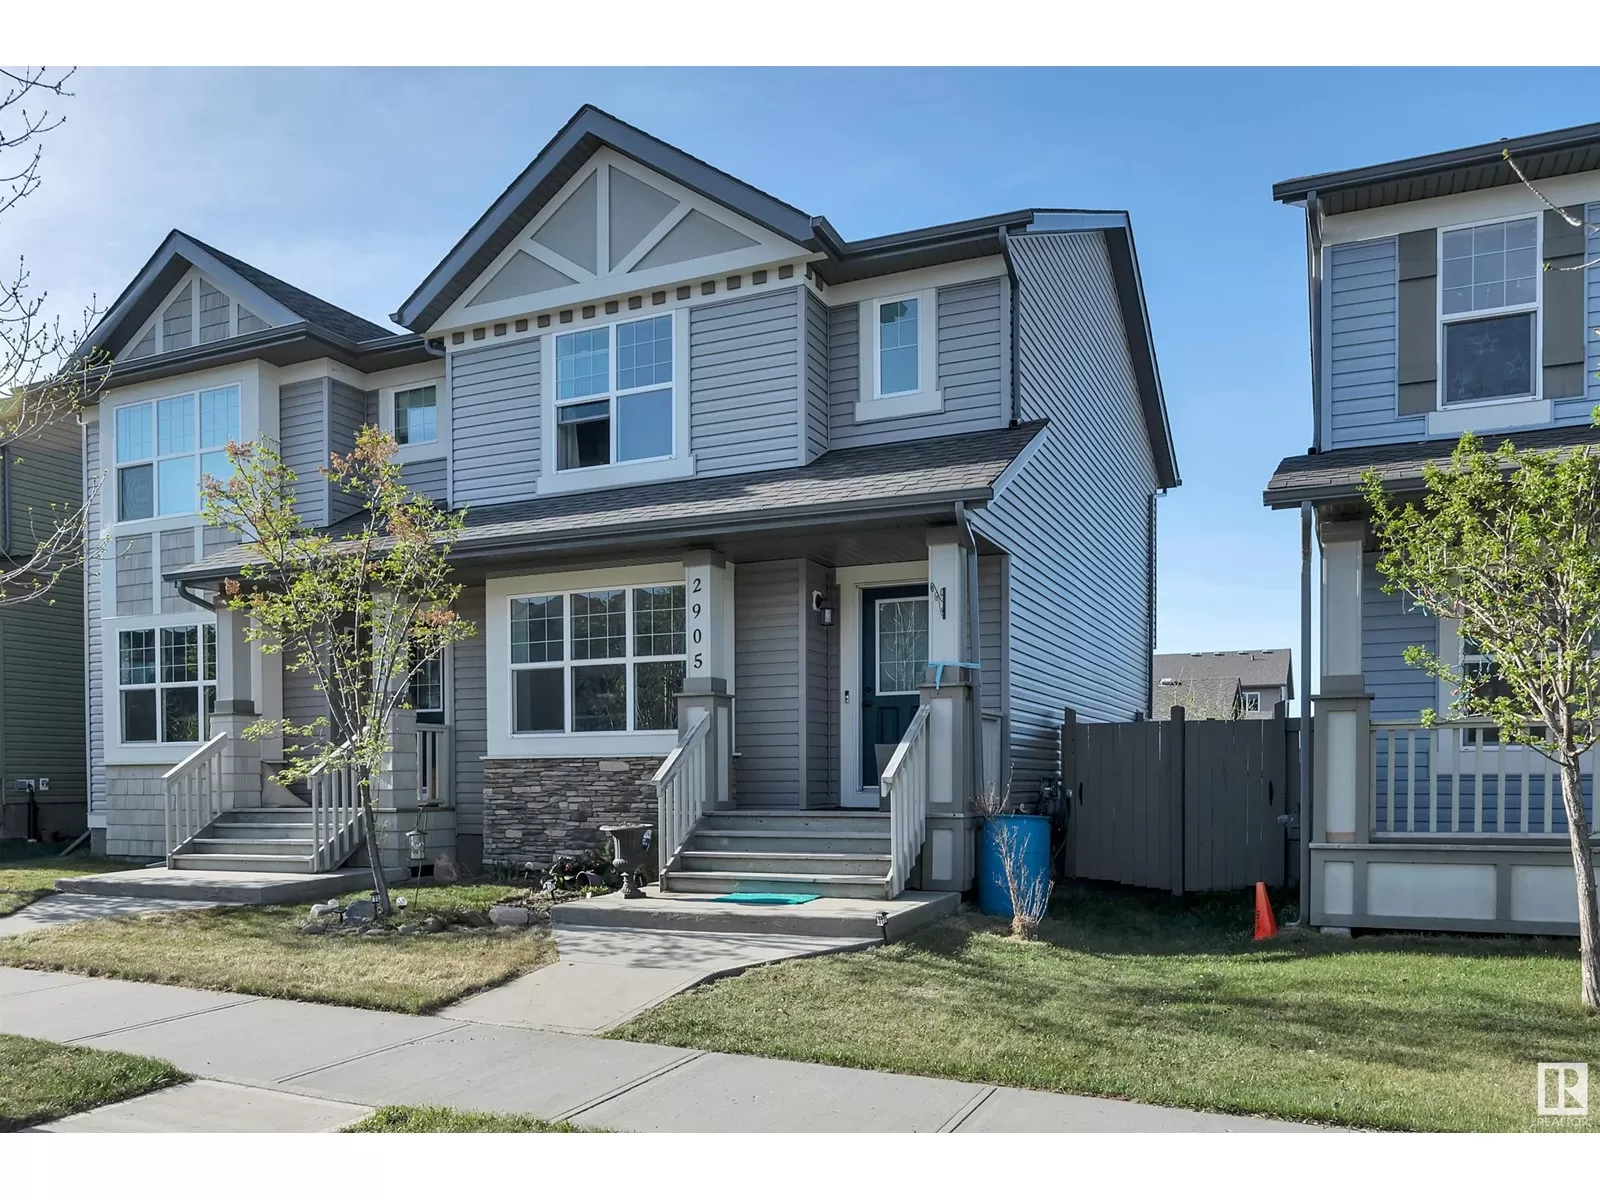 Duplex for rent: 2905 19 Av Nw Nw, Edmonton, Alberta T6T 0N6